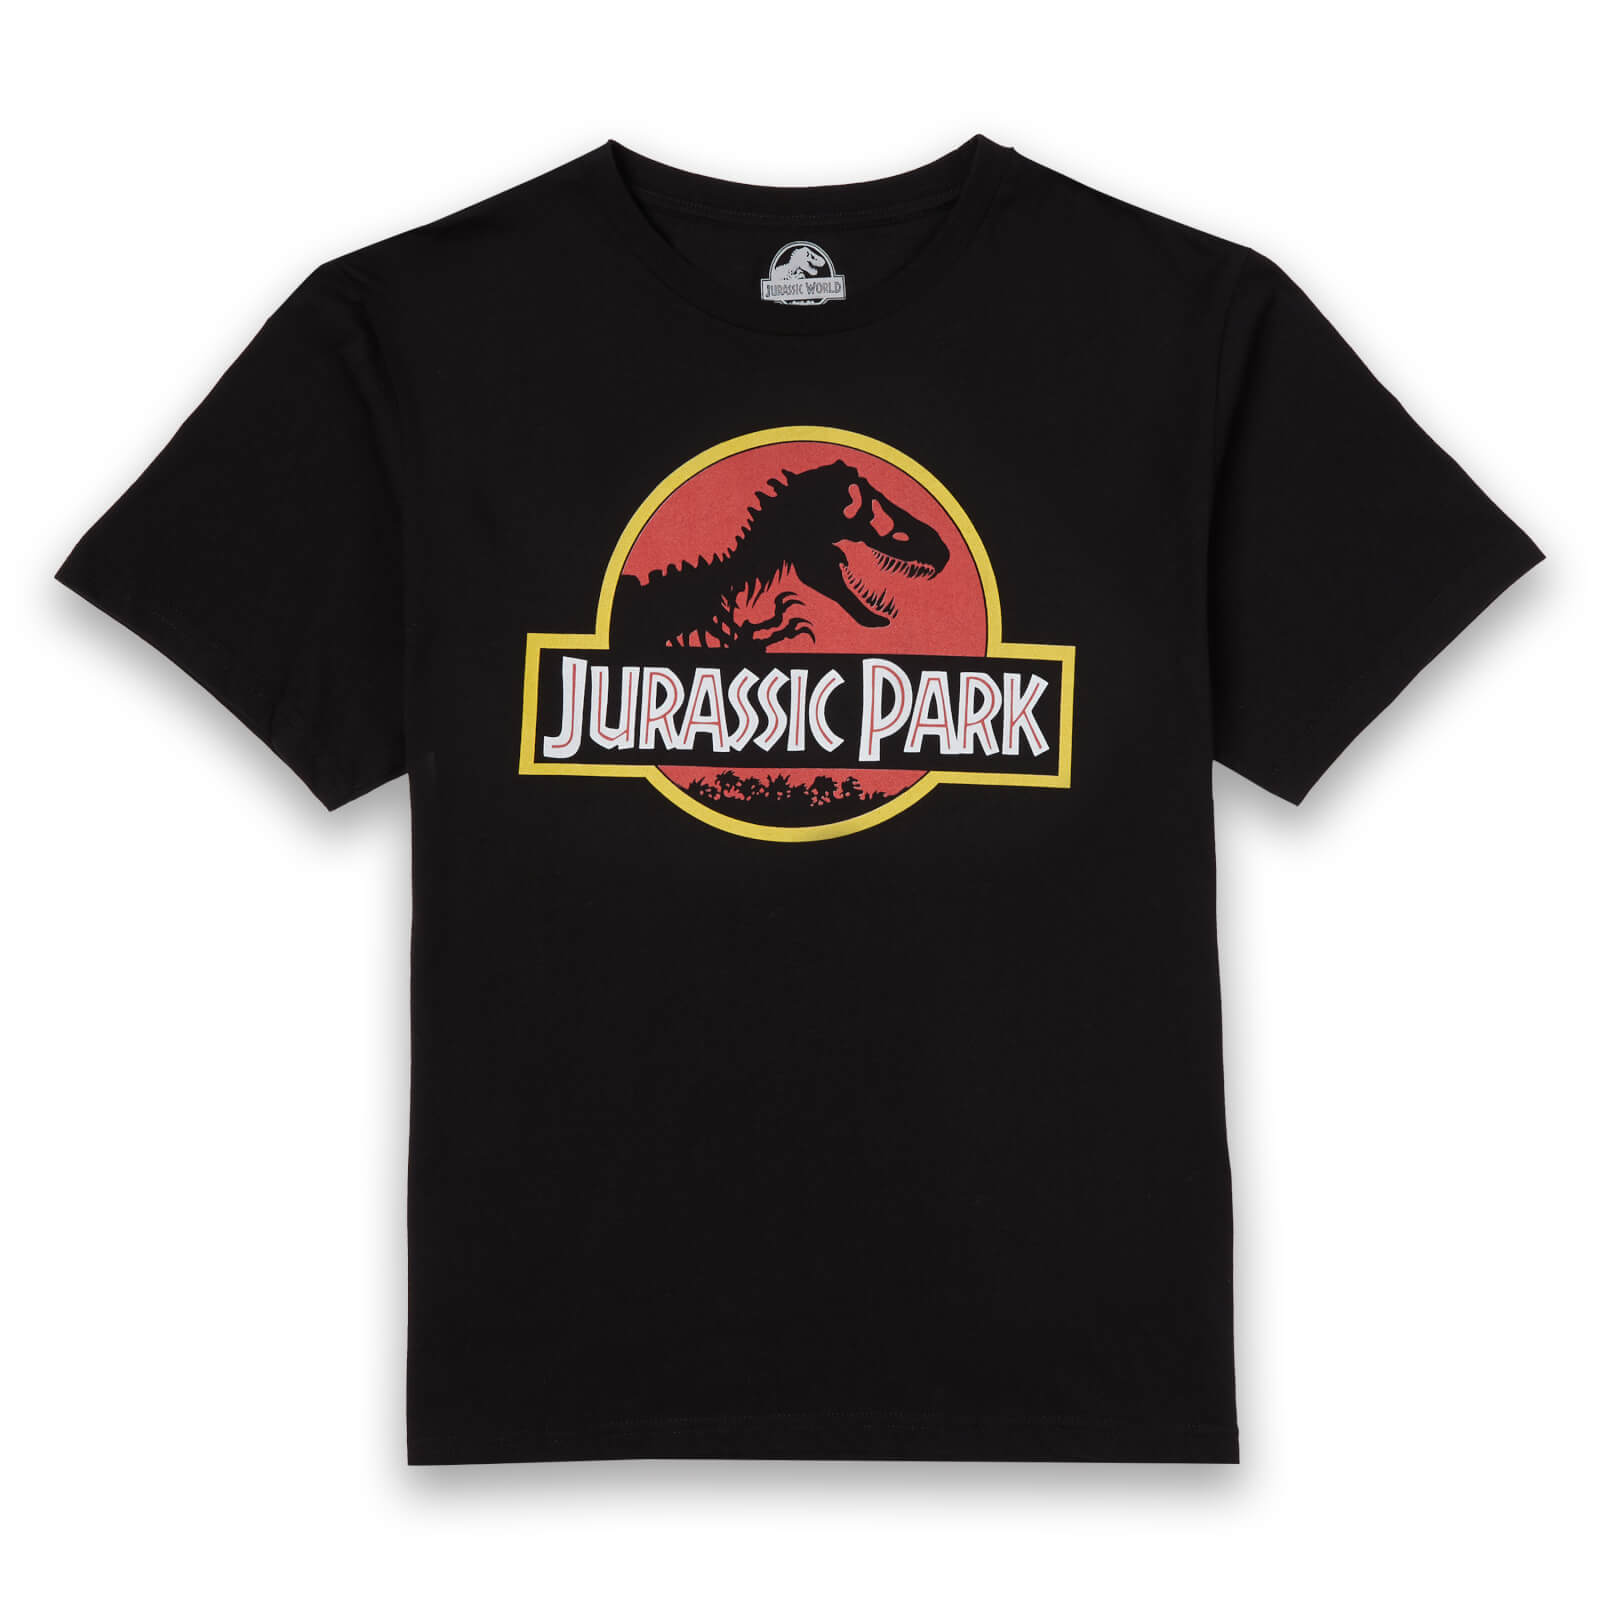 Classic Jurassic Park Logo Men's T-Shirt - Black - XXL